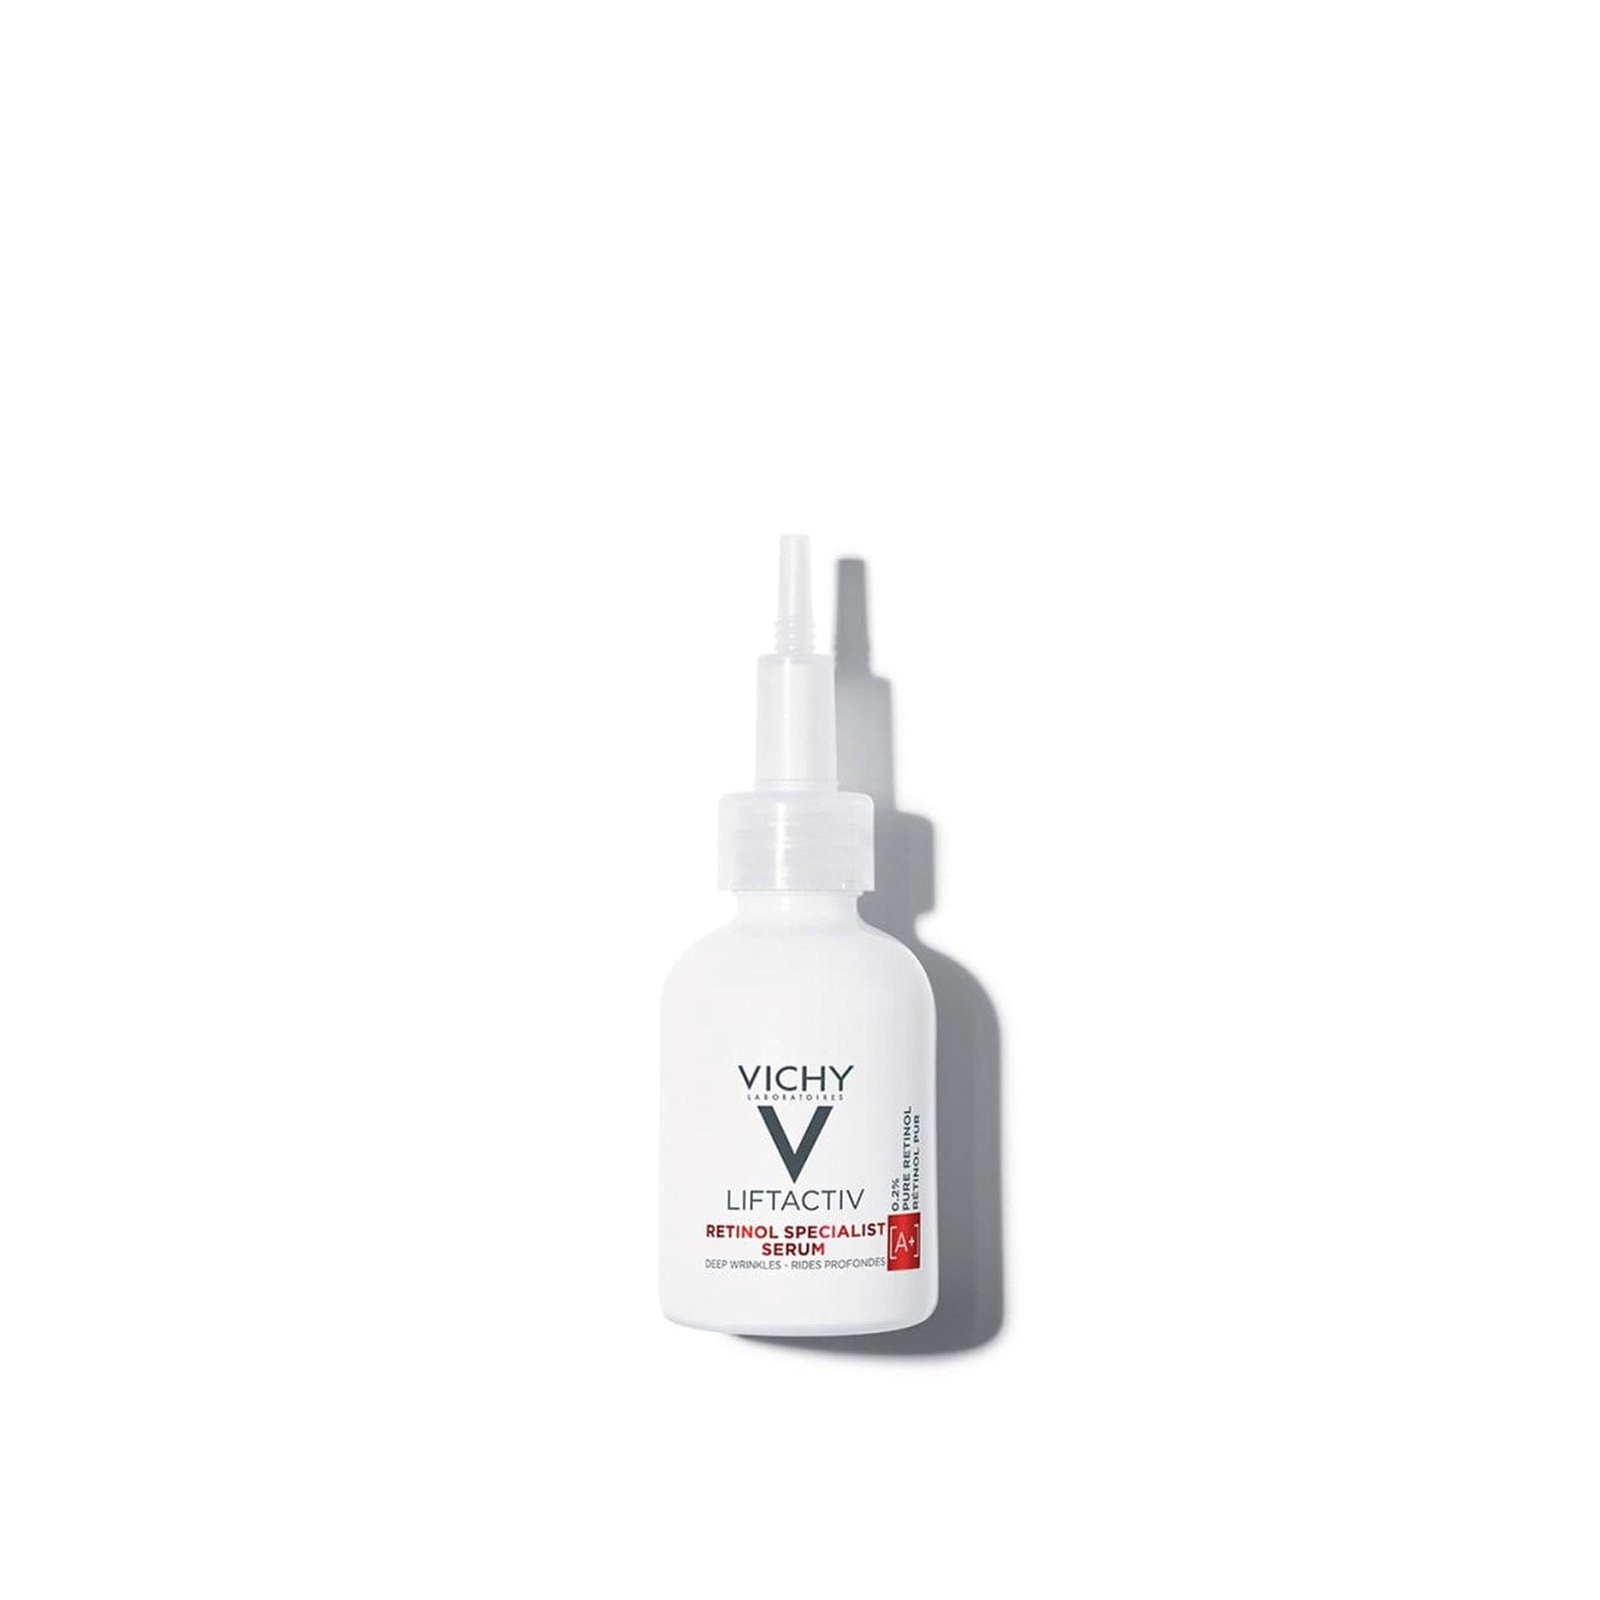 Vichy Liftactiv [ A+] Retinol Specialist Deep Wrinkles Serum 30ml (1.0 fl oz)